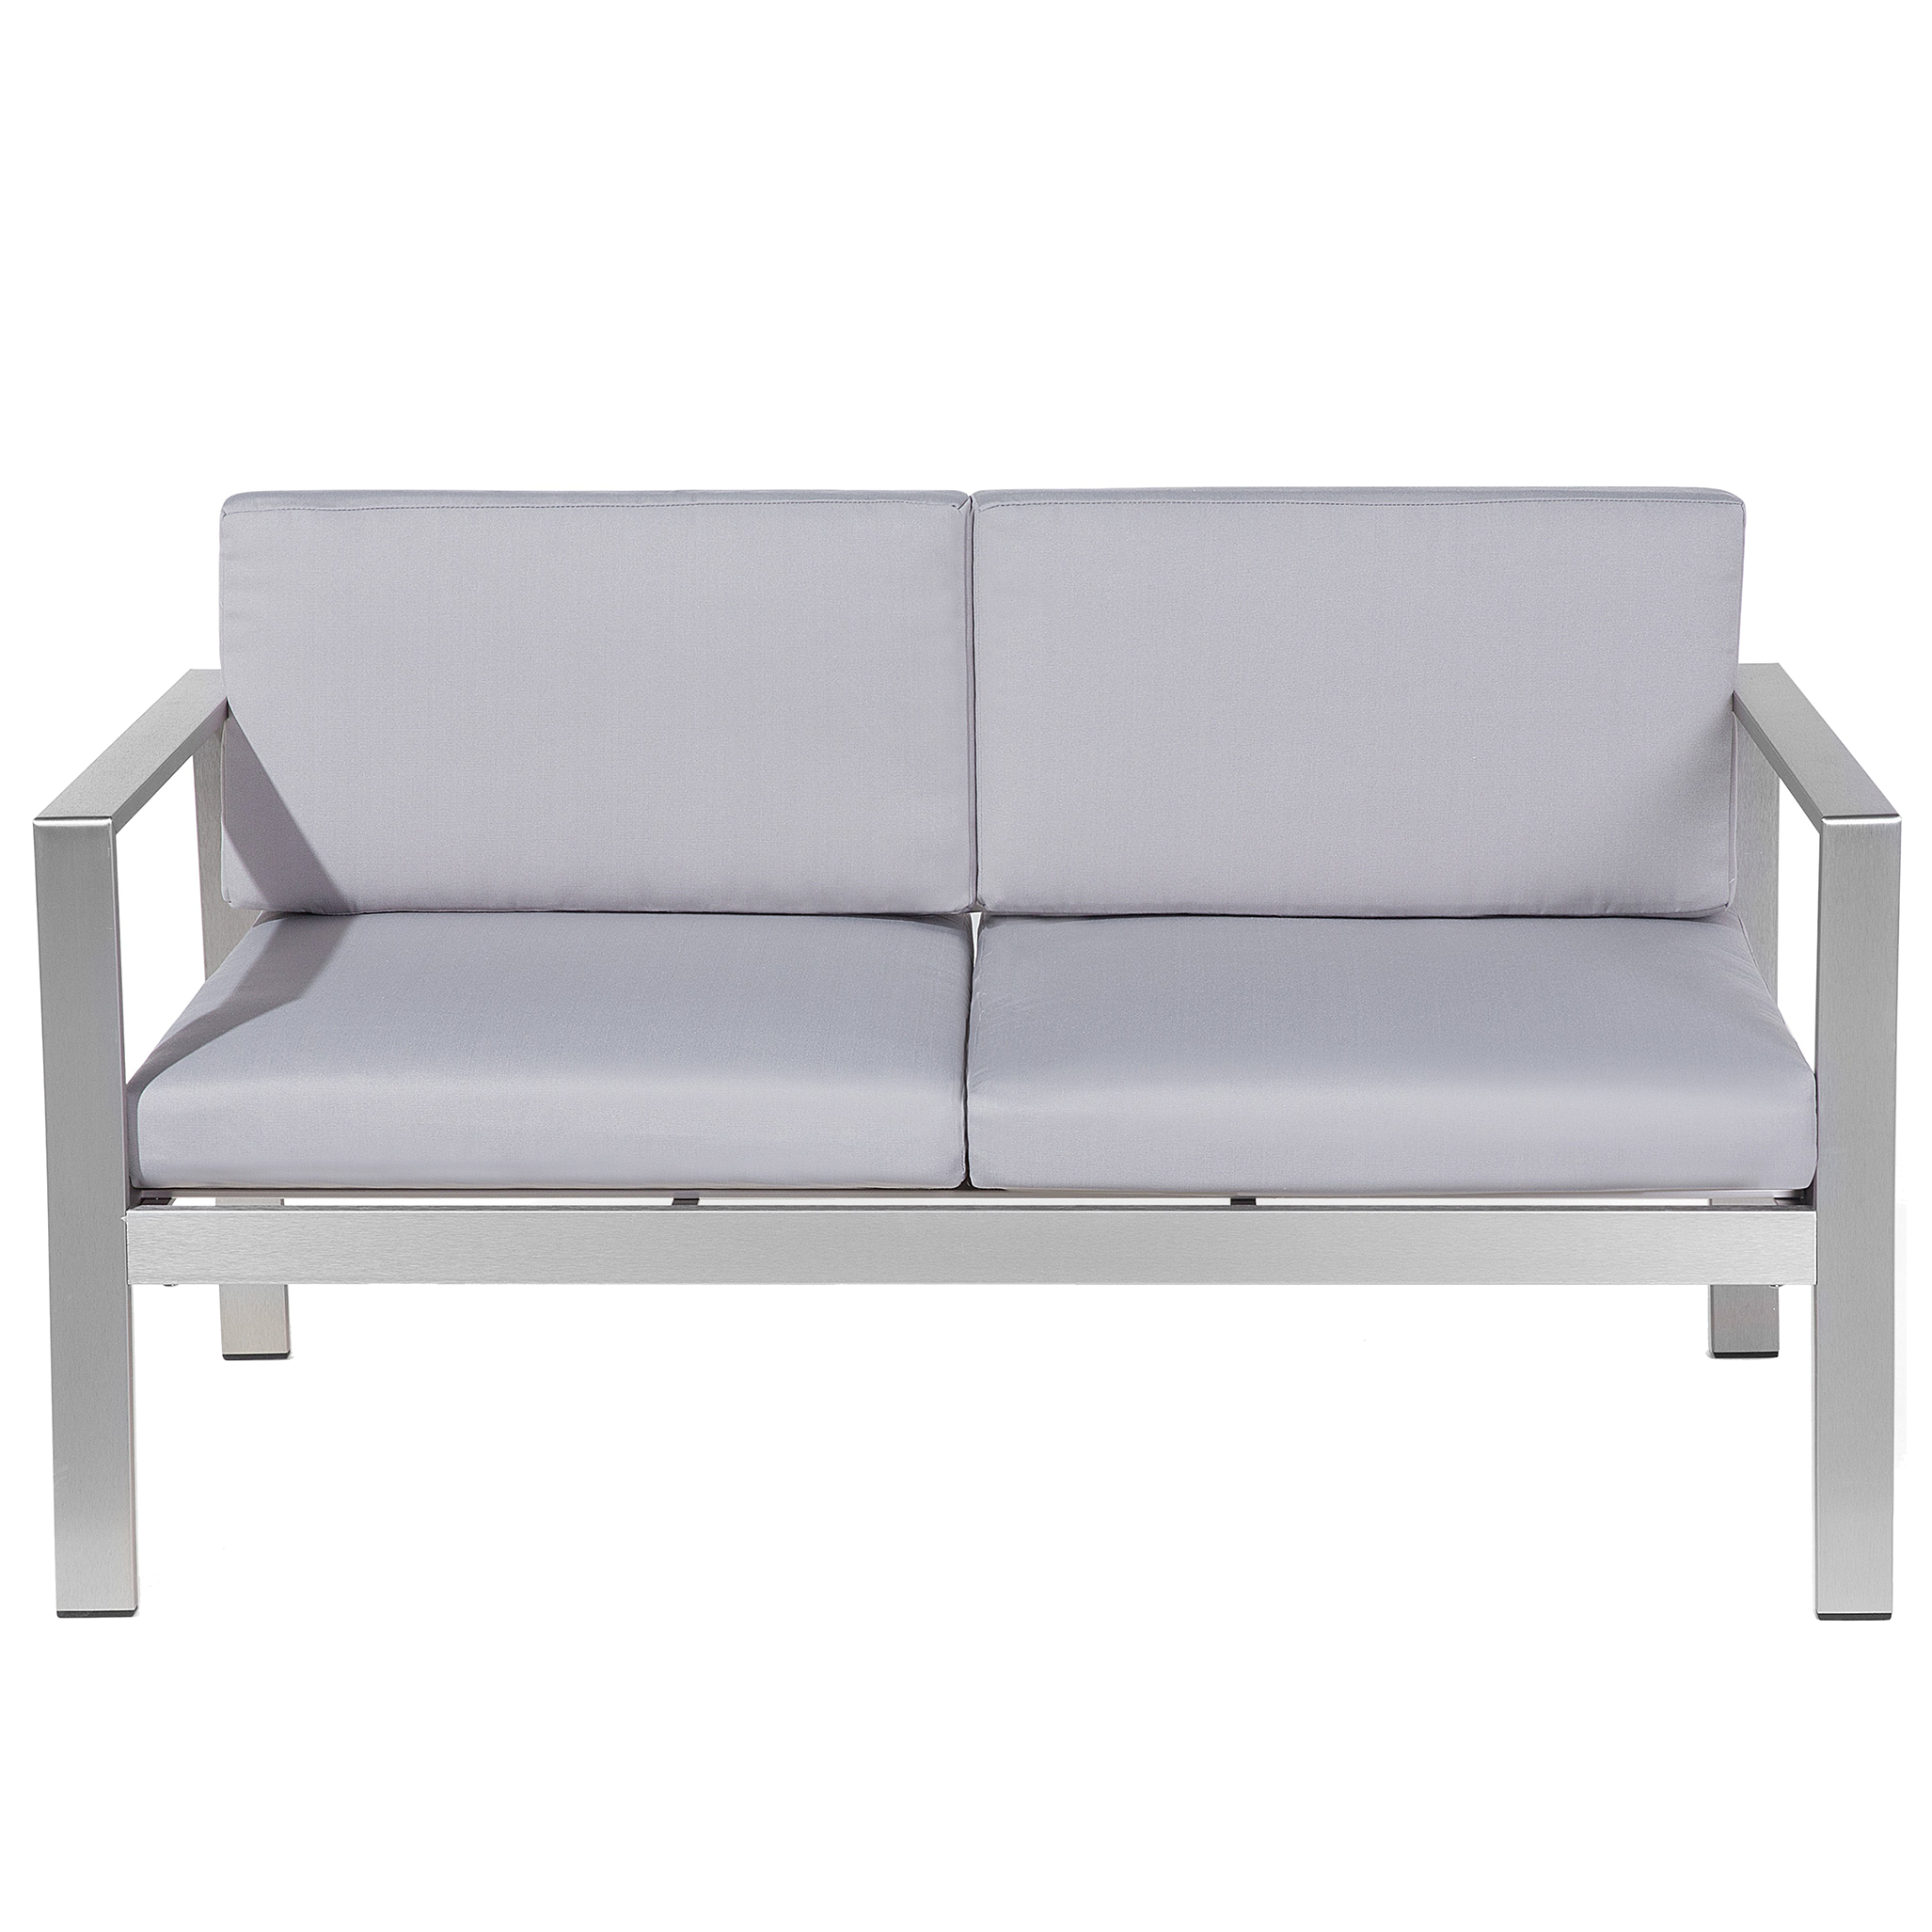 Beliani Garden Sofa Light Grey Aluminium Frame Outdoor 2 Seater with Cushions